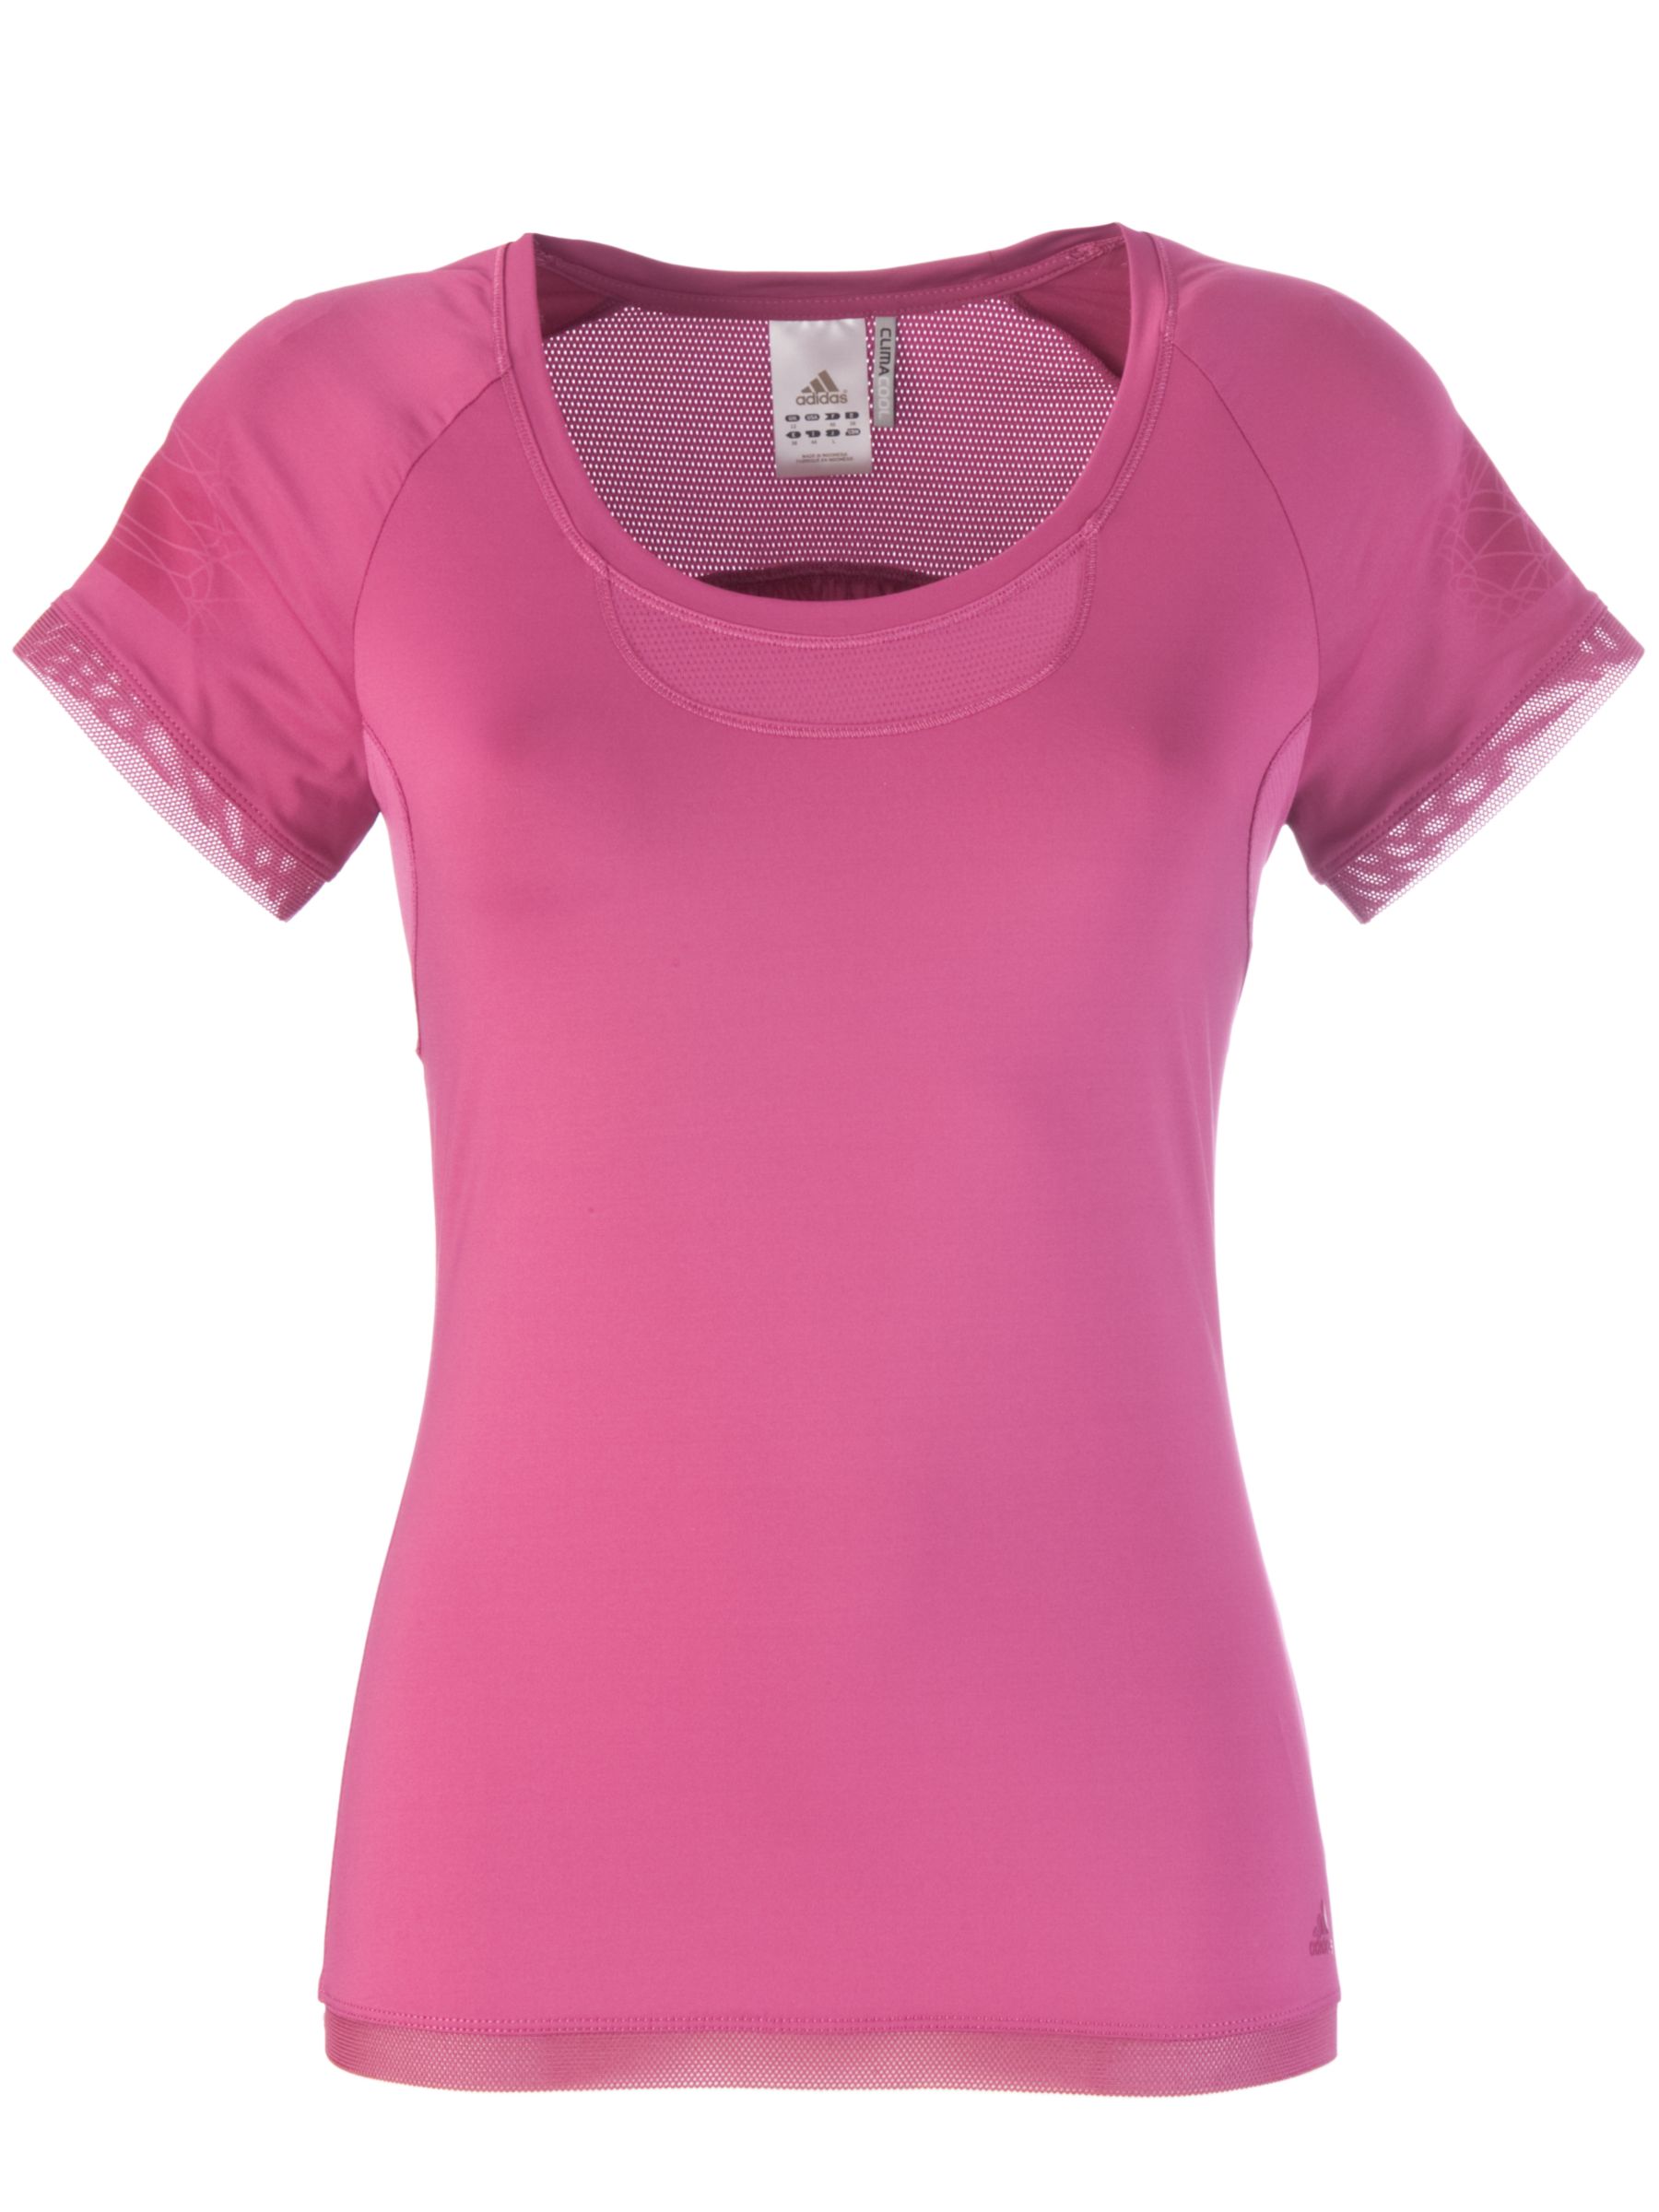 Adidas Adilibria T-Shirt, Pink